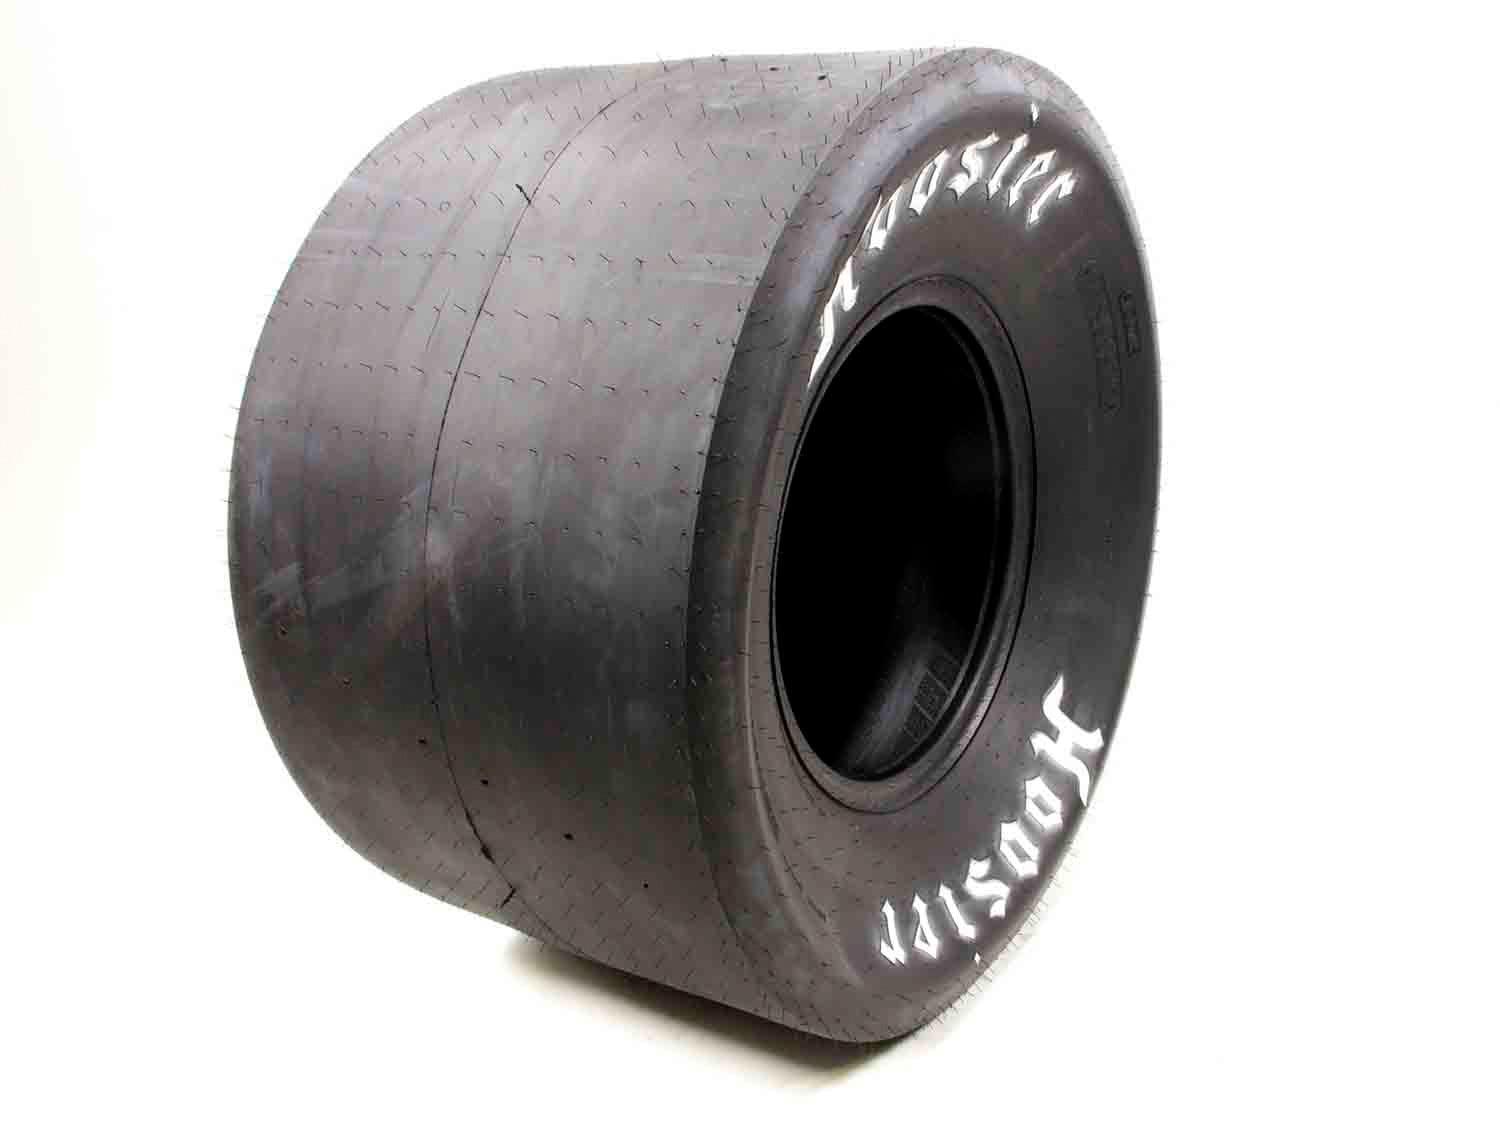 33.0/16-15 Drag Tire - Burlile Performance Products